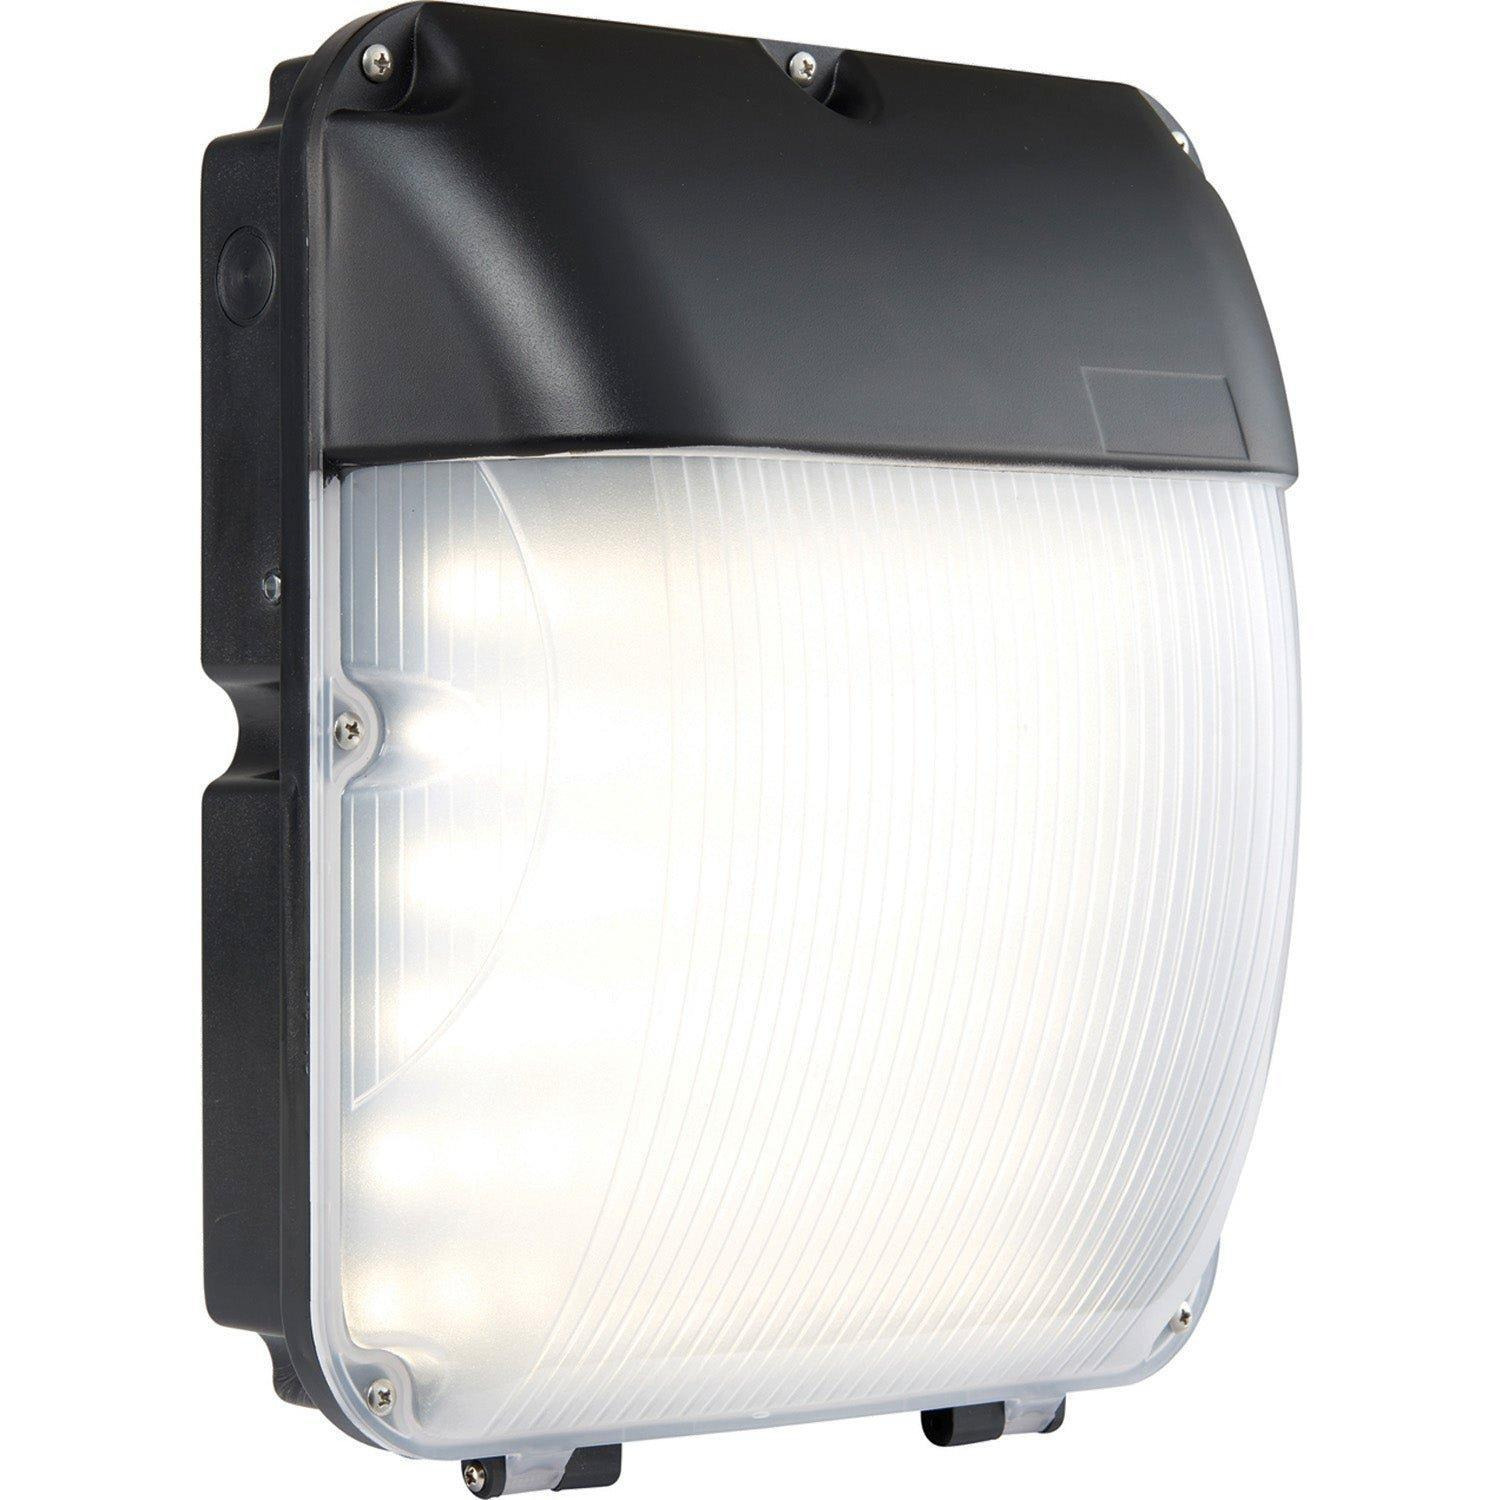 Outdoor Wall Mounted Bulkhead Light - 30W Cool White LED - Photocell Sensor - image 1